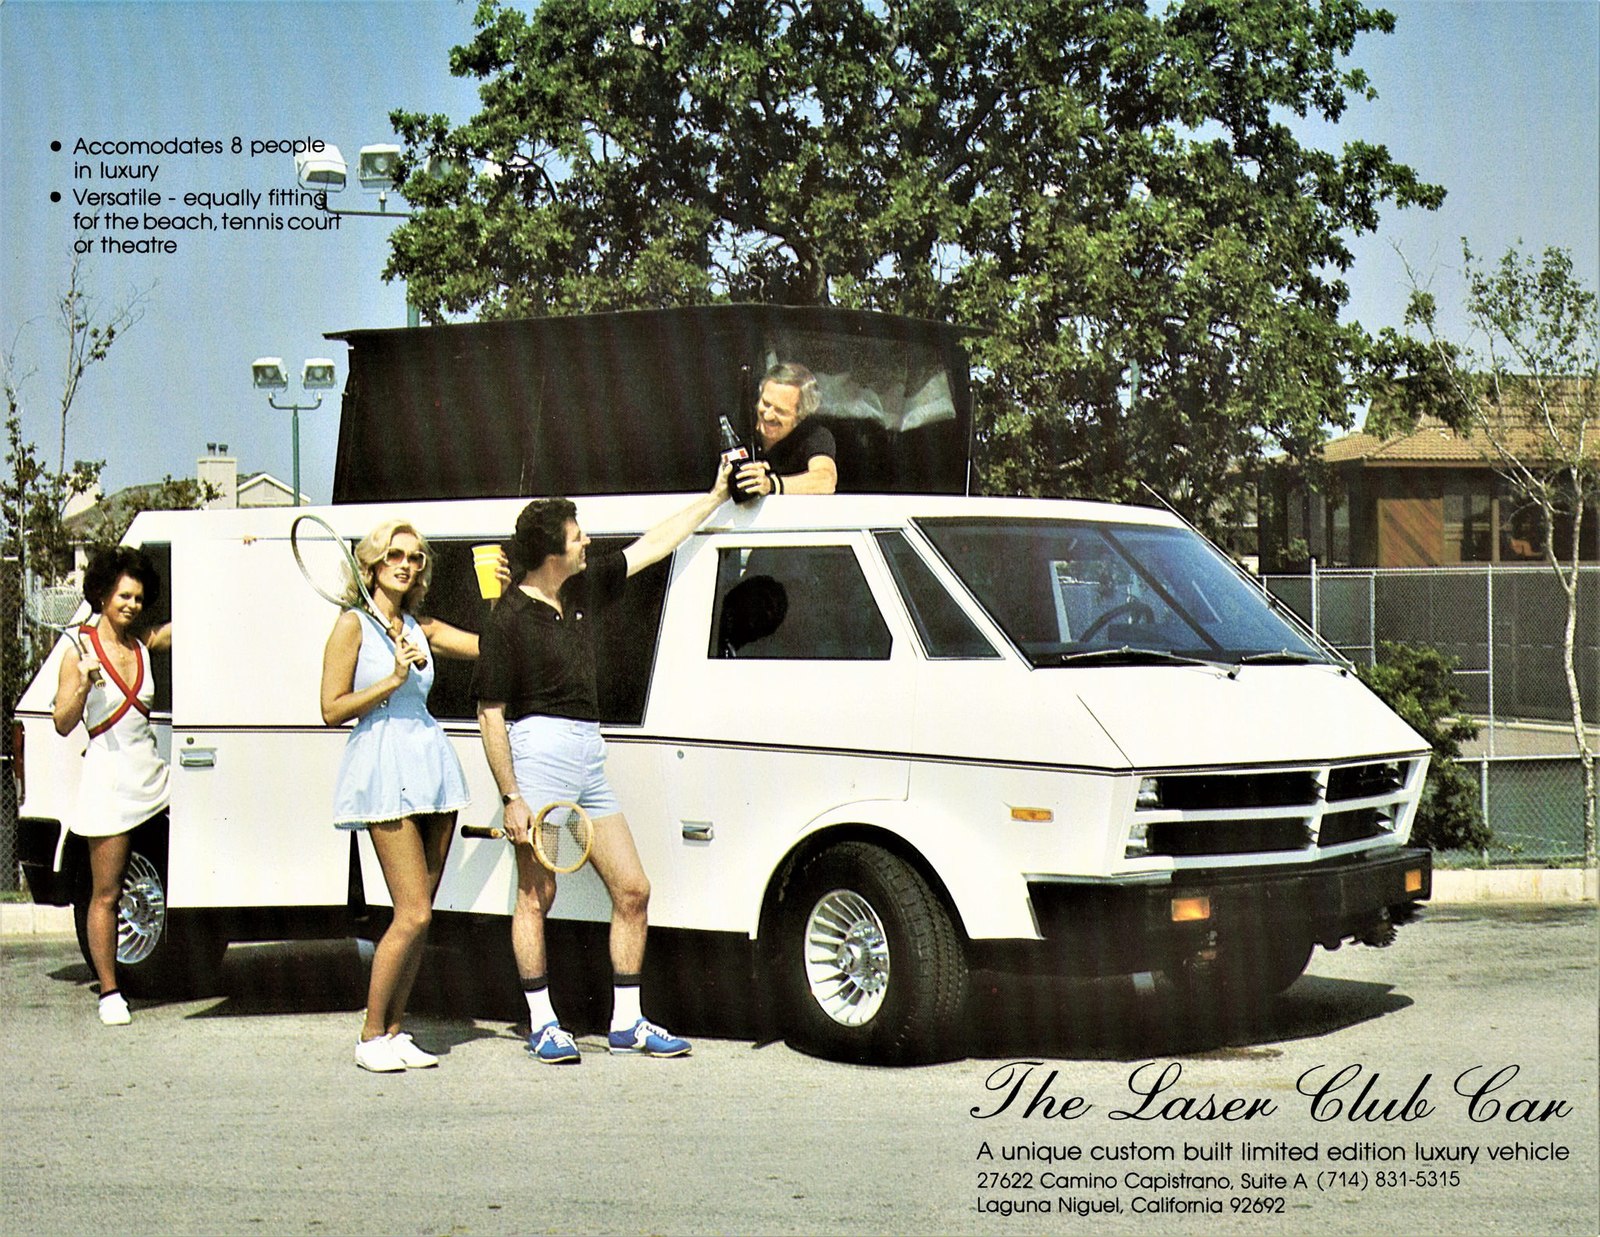 Laser Club Car - where dreams lead! - Laser, Elite, , , Drive2, Amazing people, Longpost, Laser